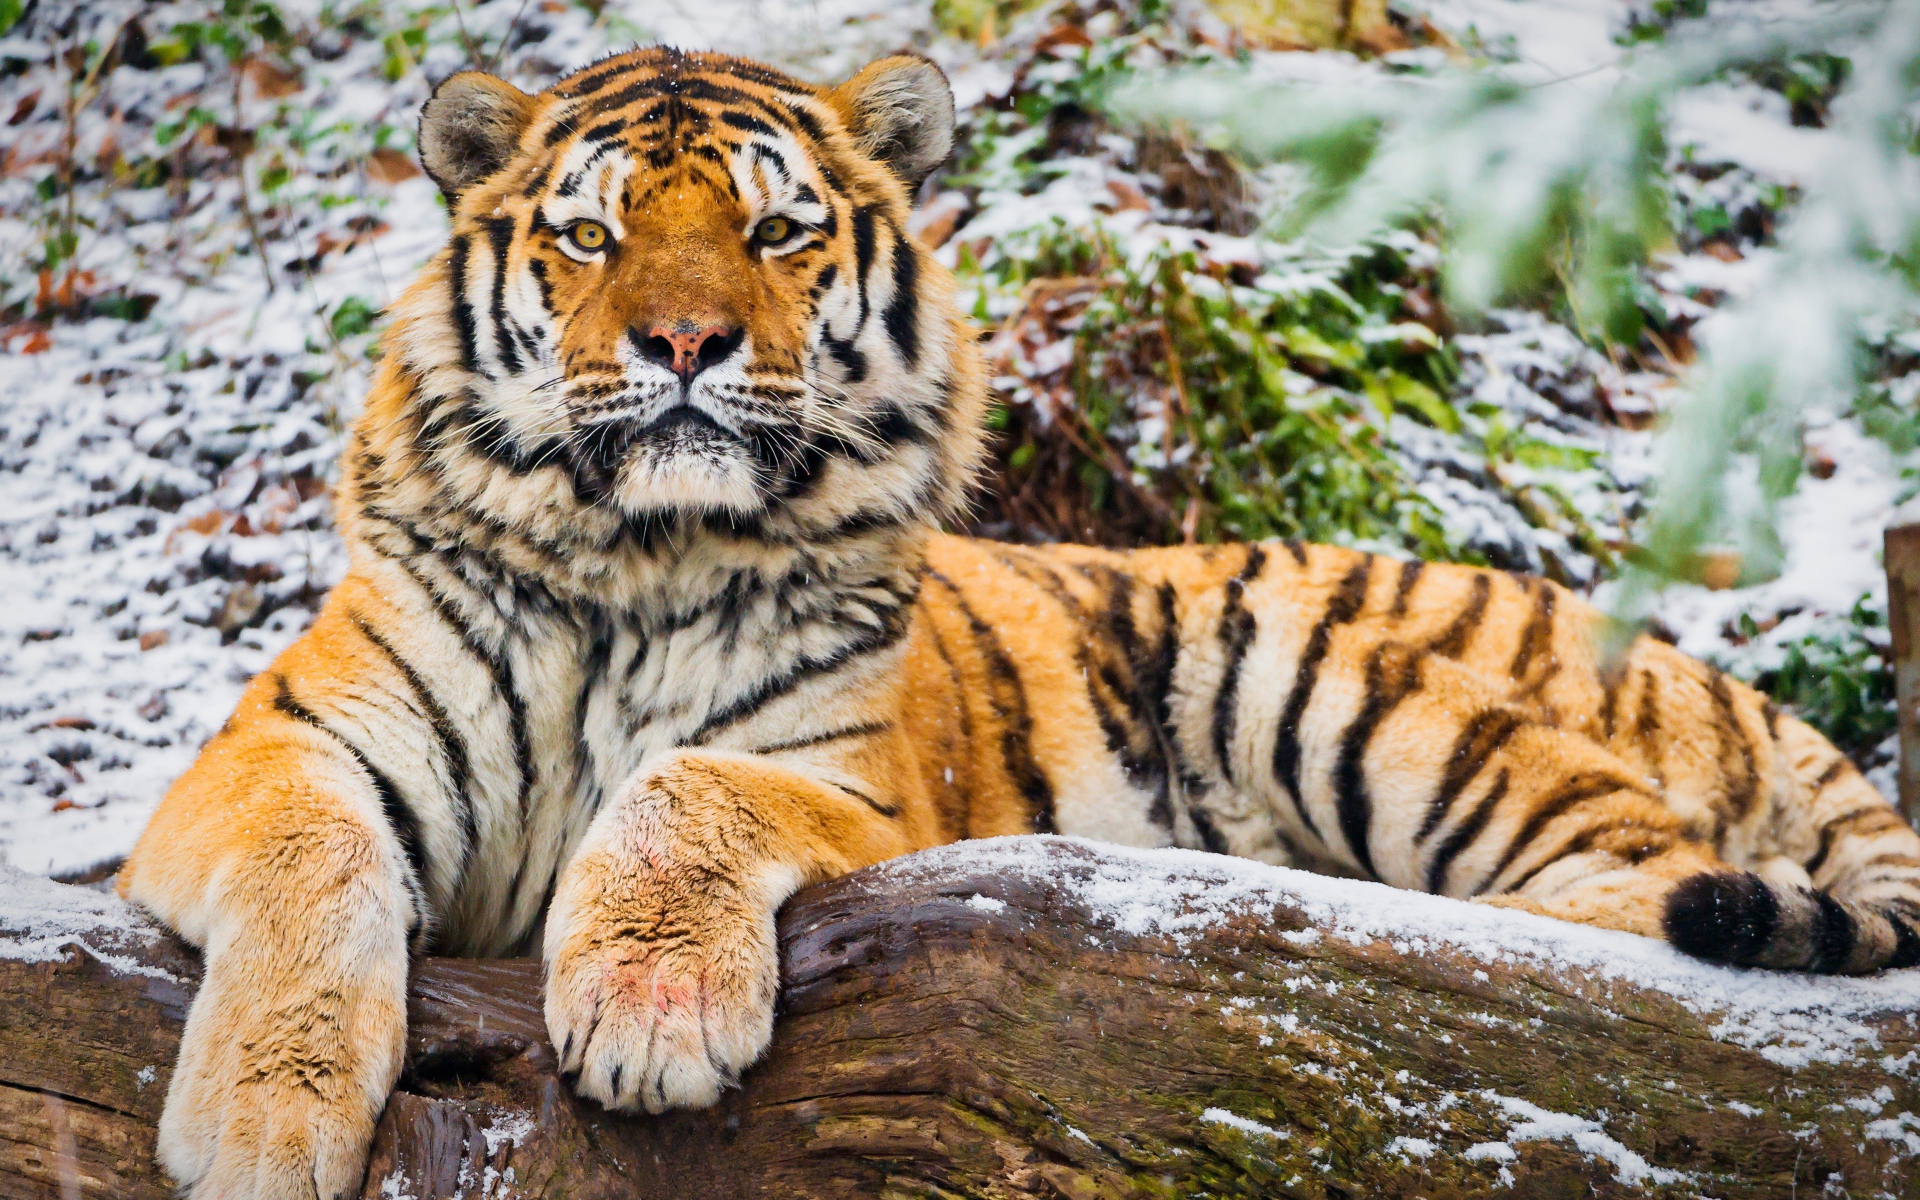 Big tiger lies on a snowy dry tree